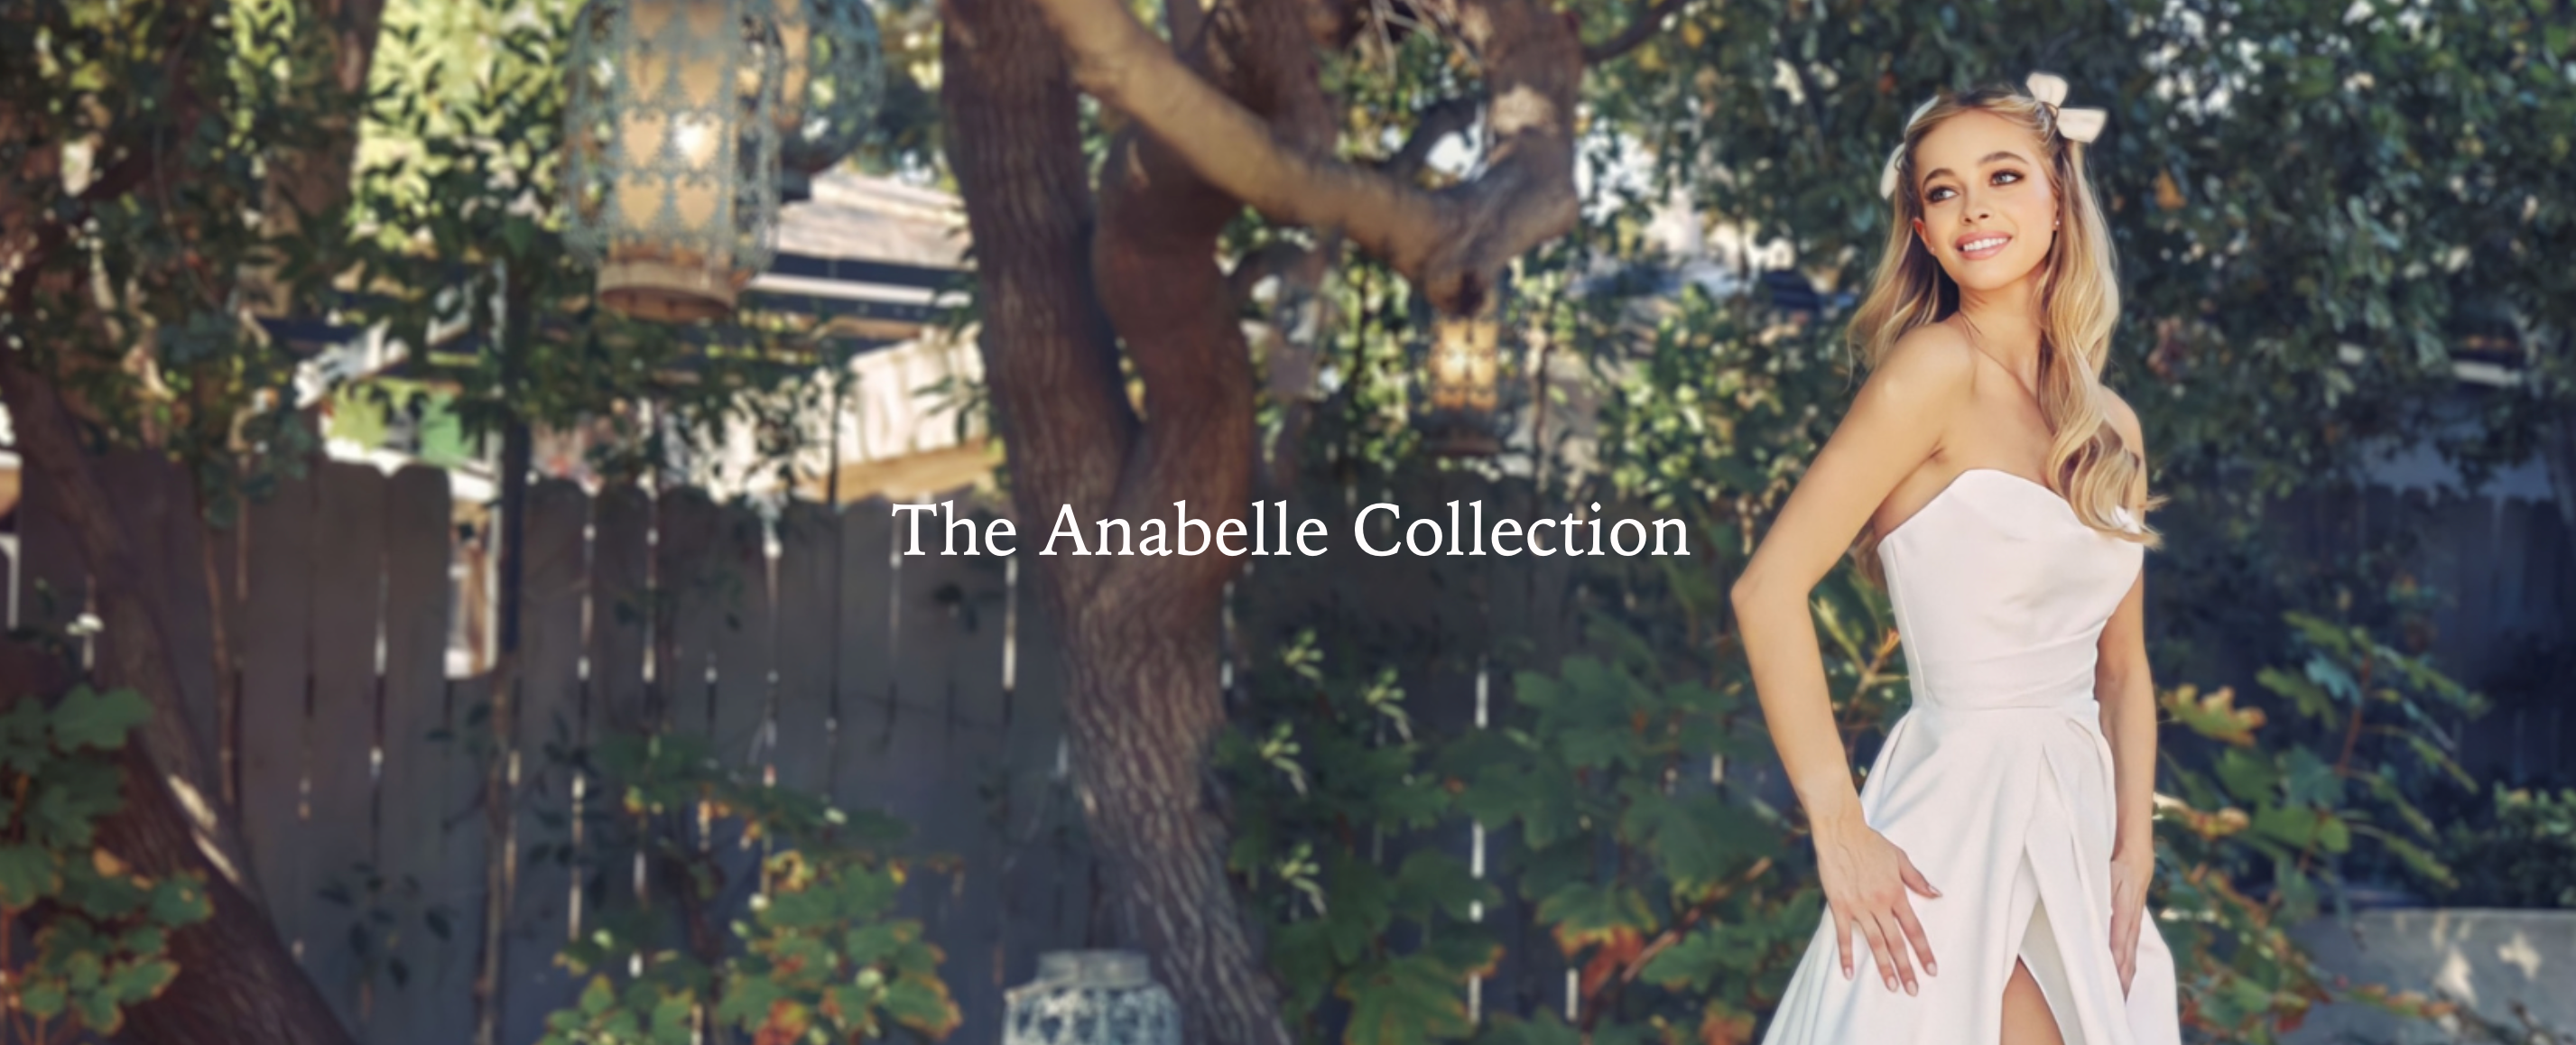 The_Anabelle_collection_TP_Kjoler_651ef509-9565-4436-9fcb-2857ffd24e15